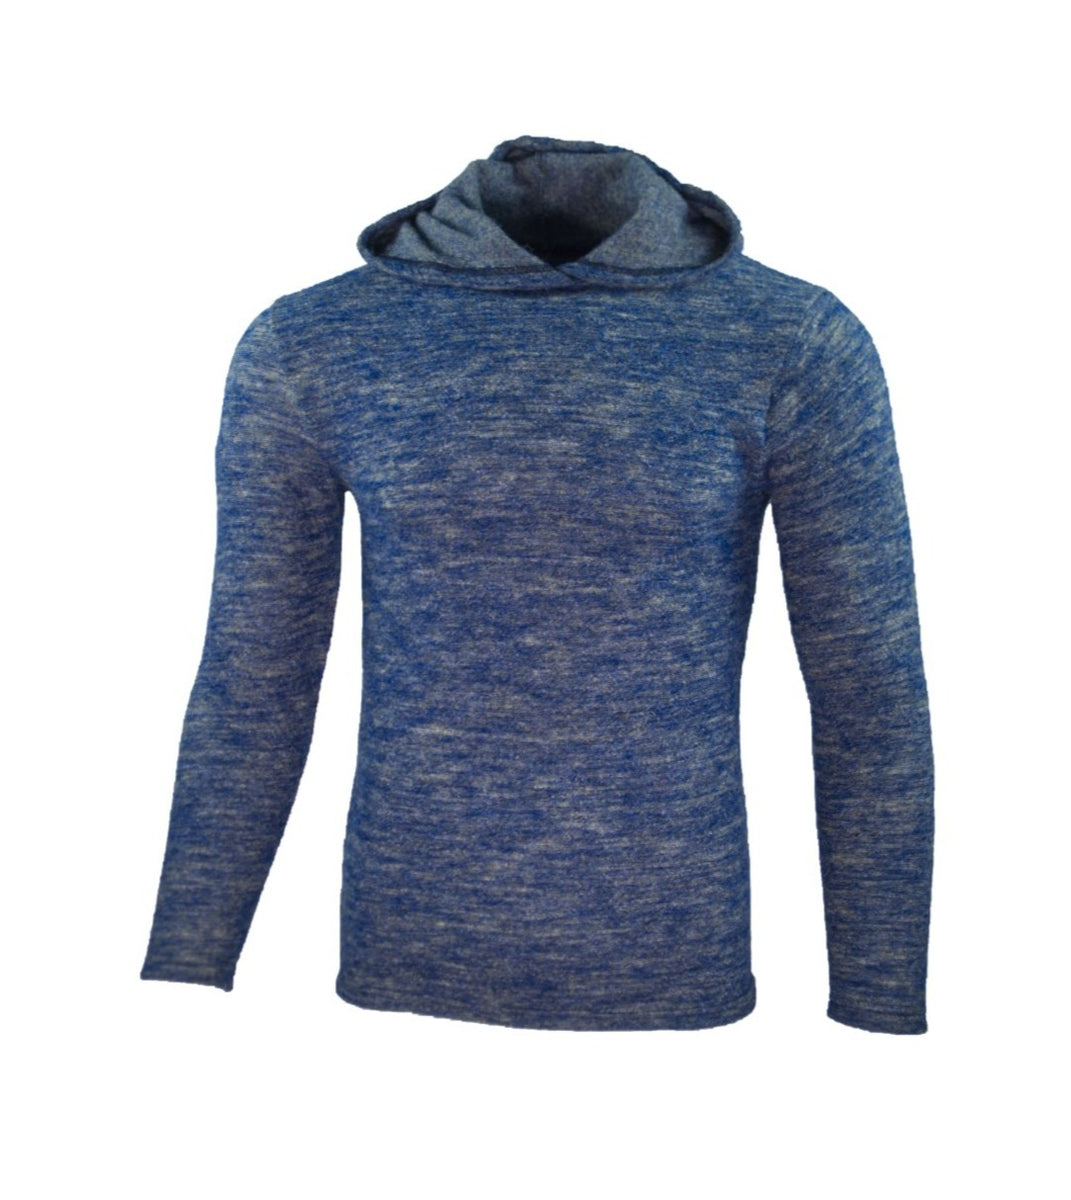 THE BACKPACKER - Sweatshirt for men - grey with details | BILLYBELT